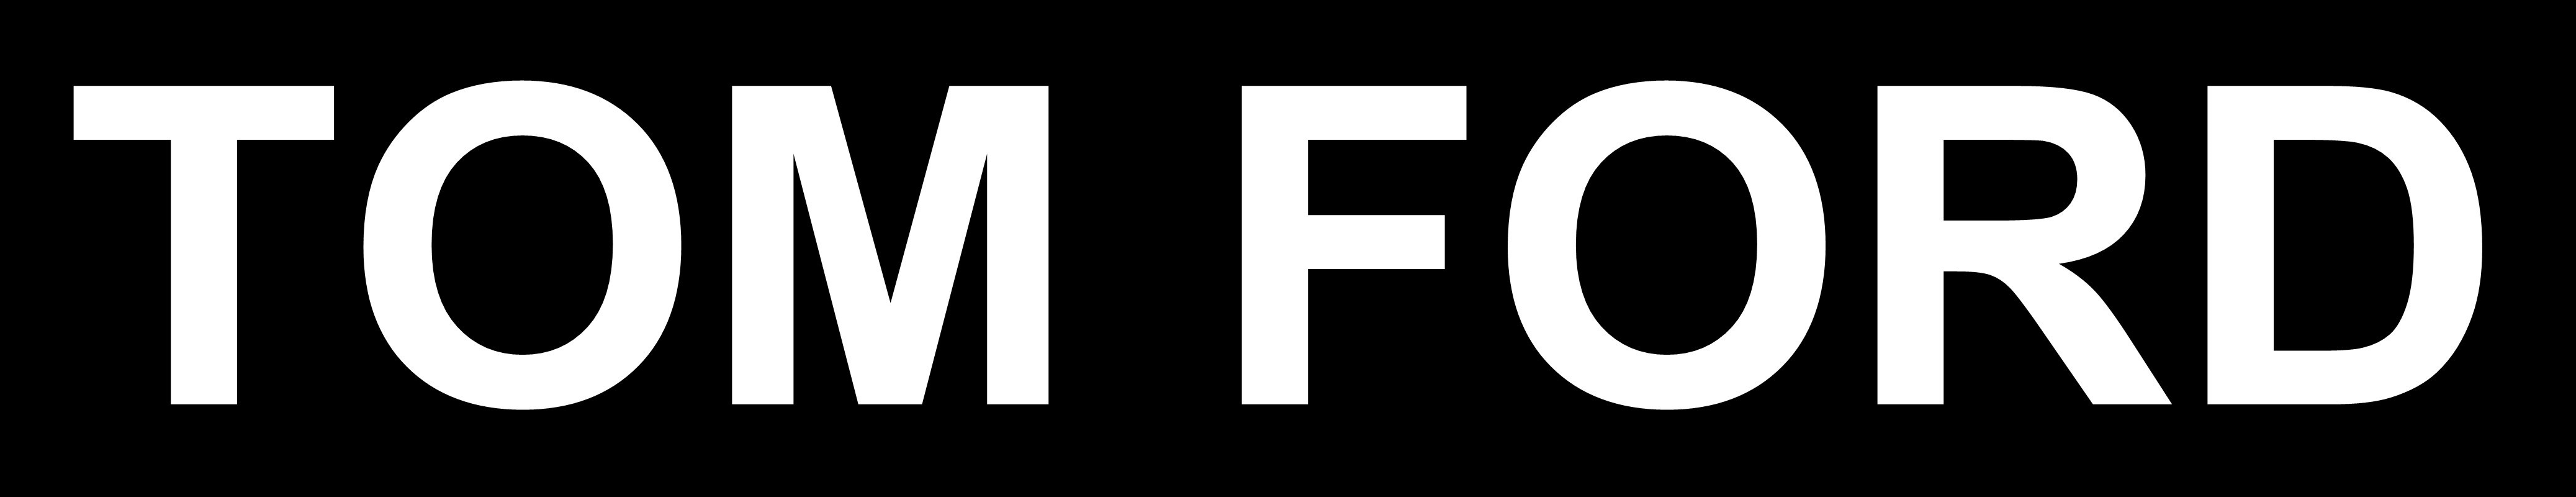 Tom Ford Logo - Tom Ford – Logos Download